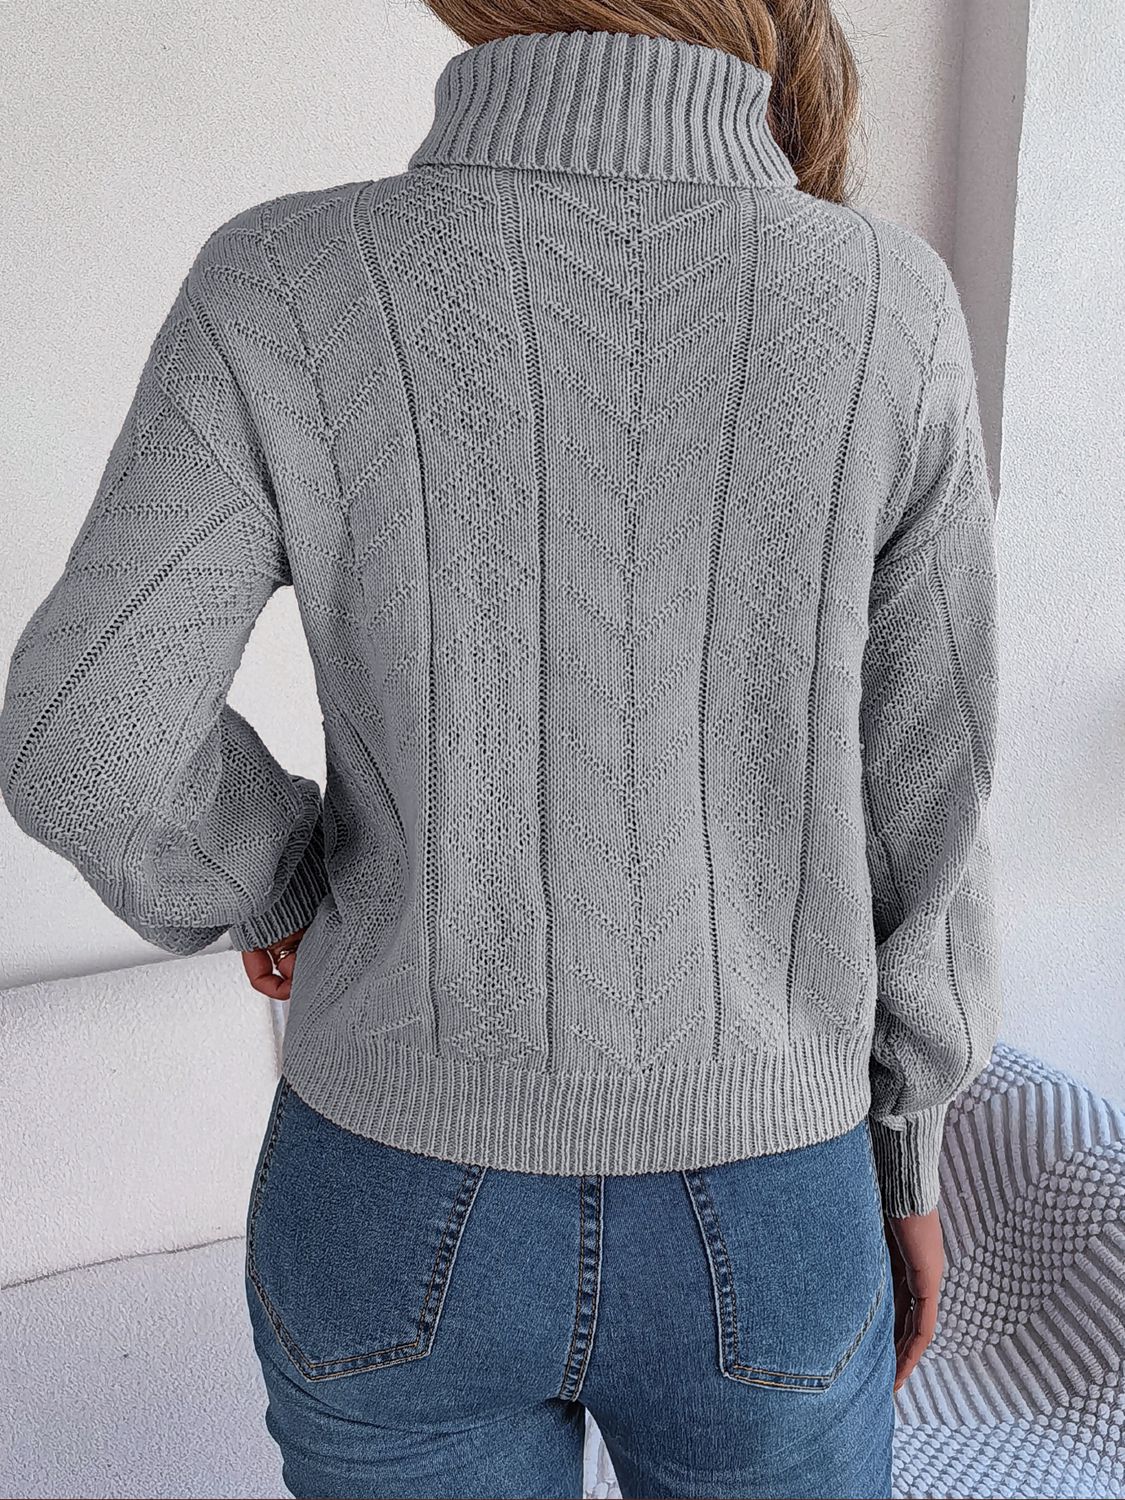 Hannah Lea Cable-Knit Turtleneck Sweater 🦋